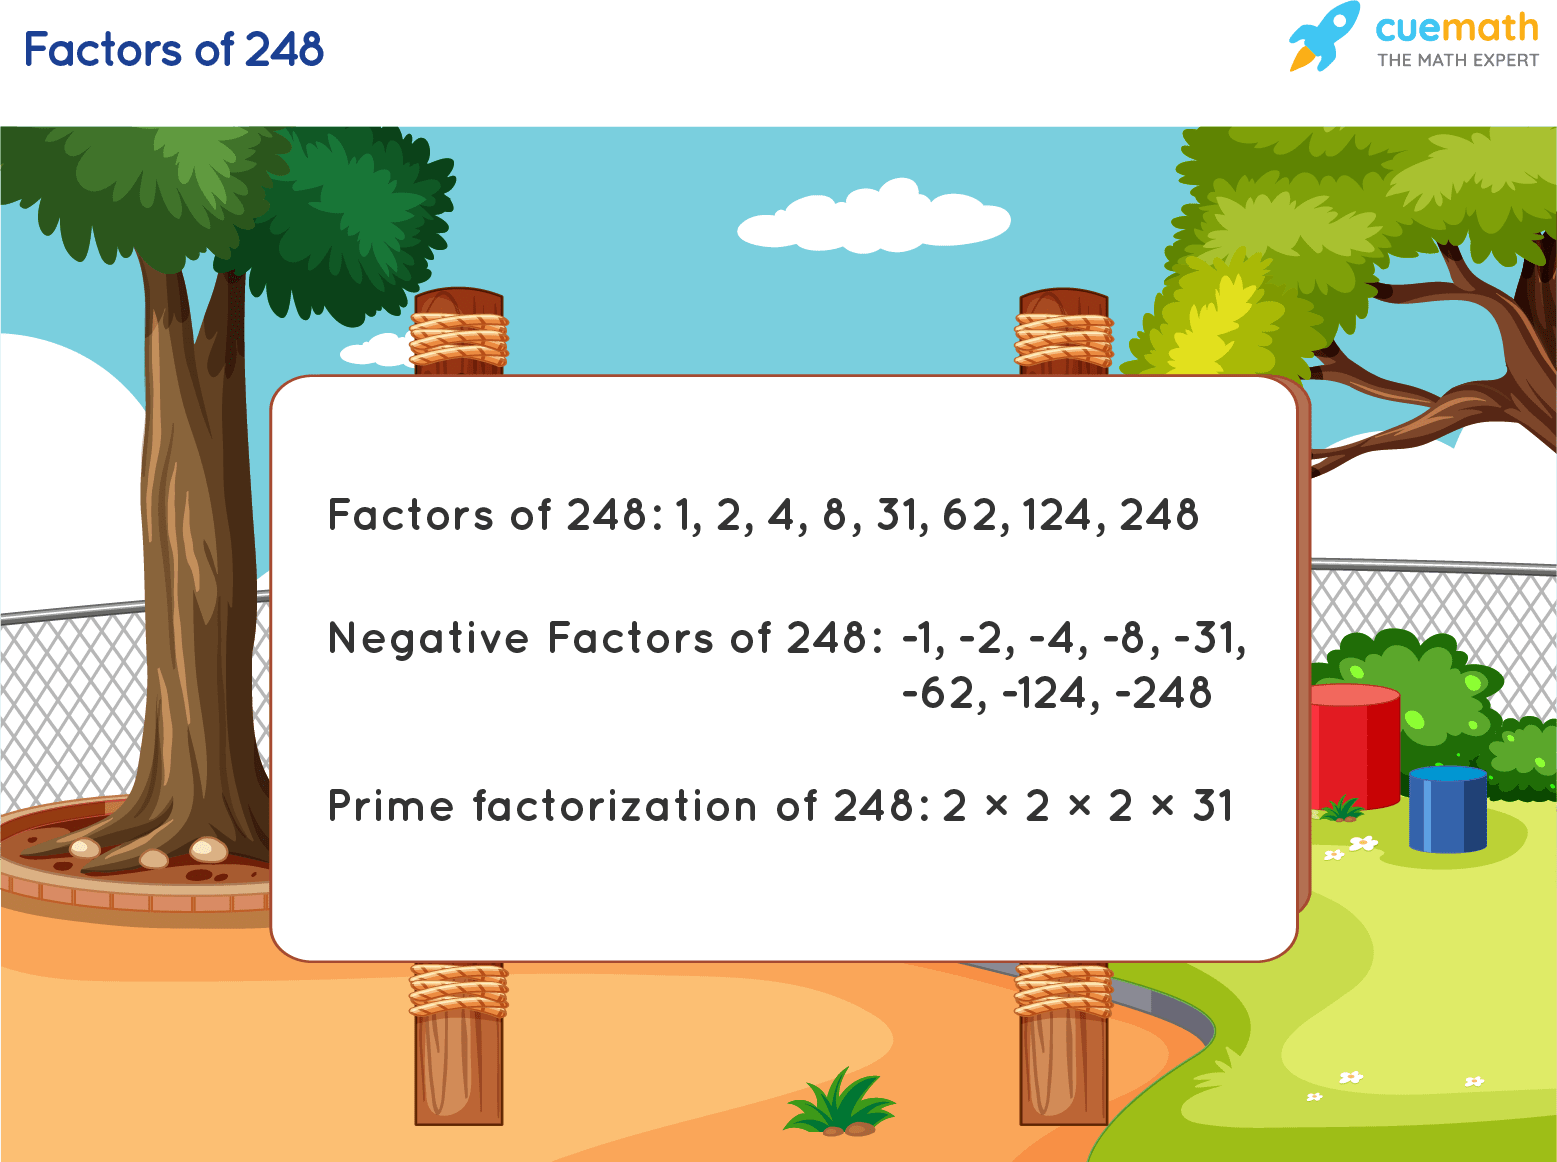 Factors of 248 - Find Prime Factorization/Factors of 248